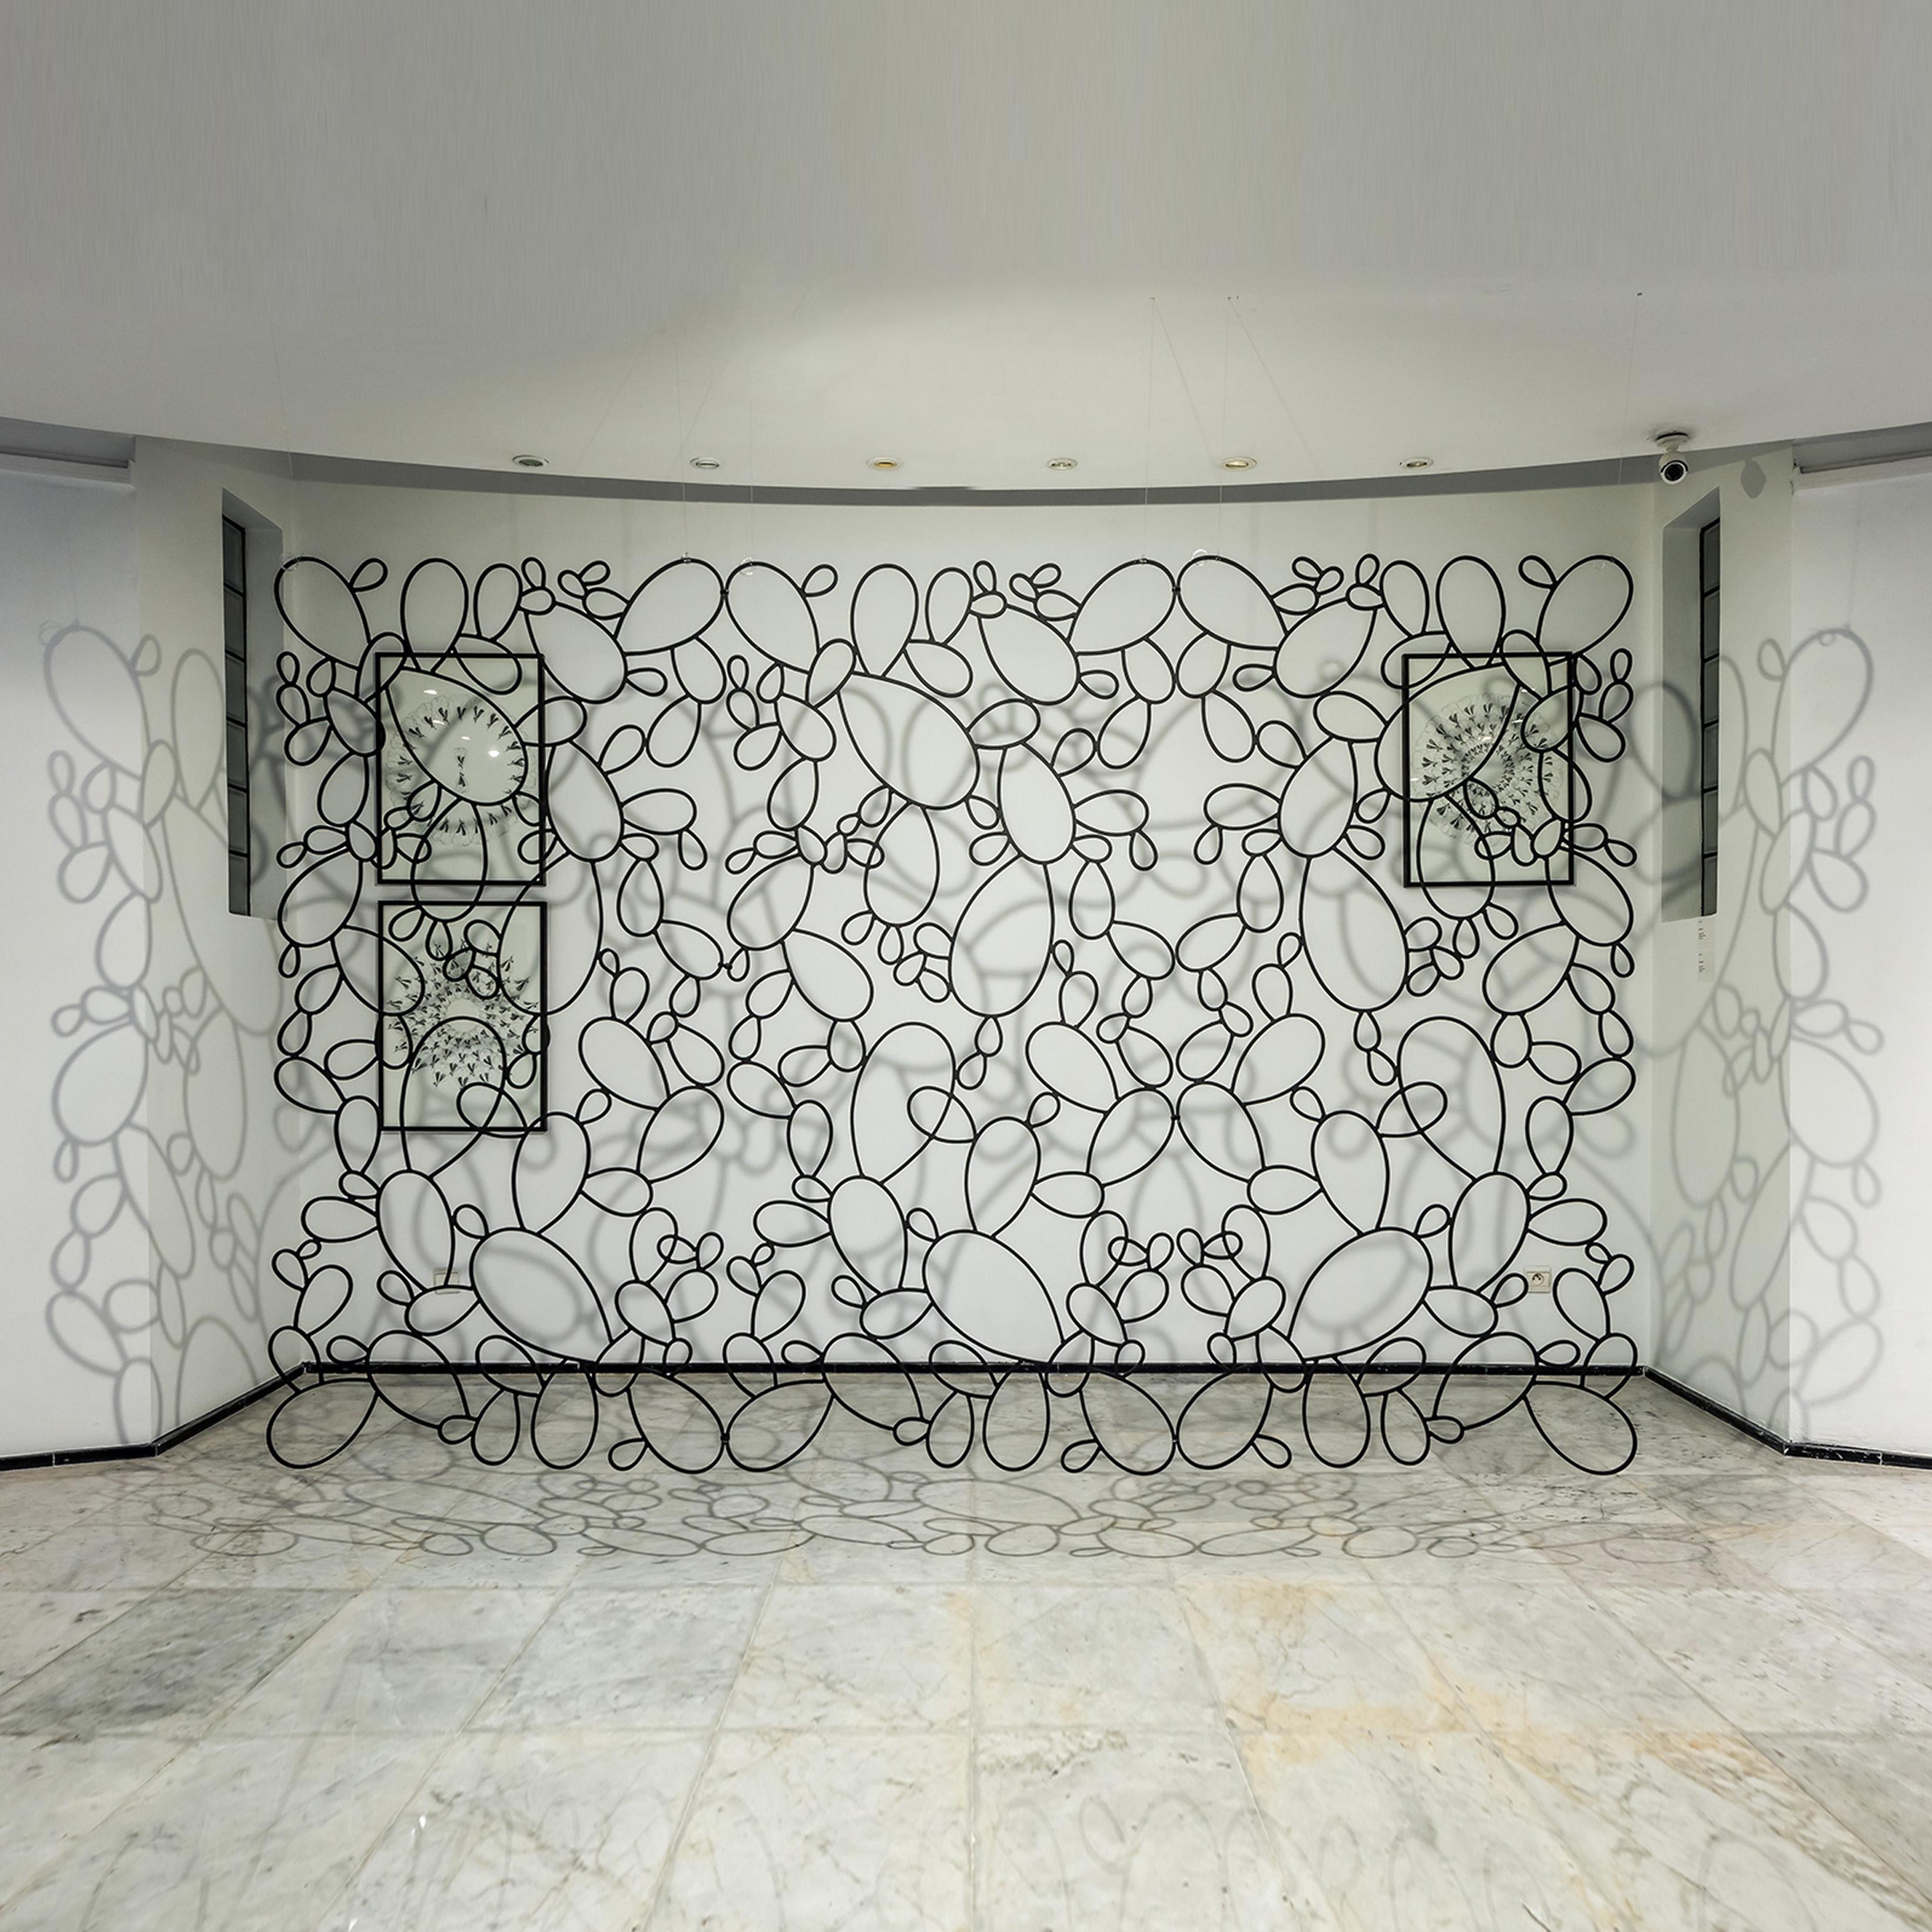 Hamza Berhil
Houdoud, 2019
Installation en métal
270 x 180 cm